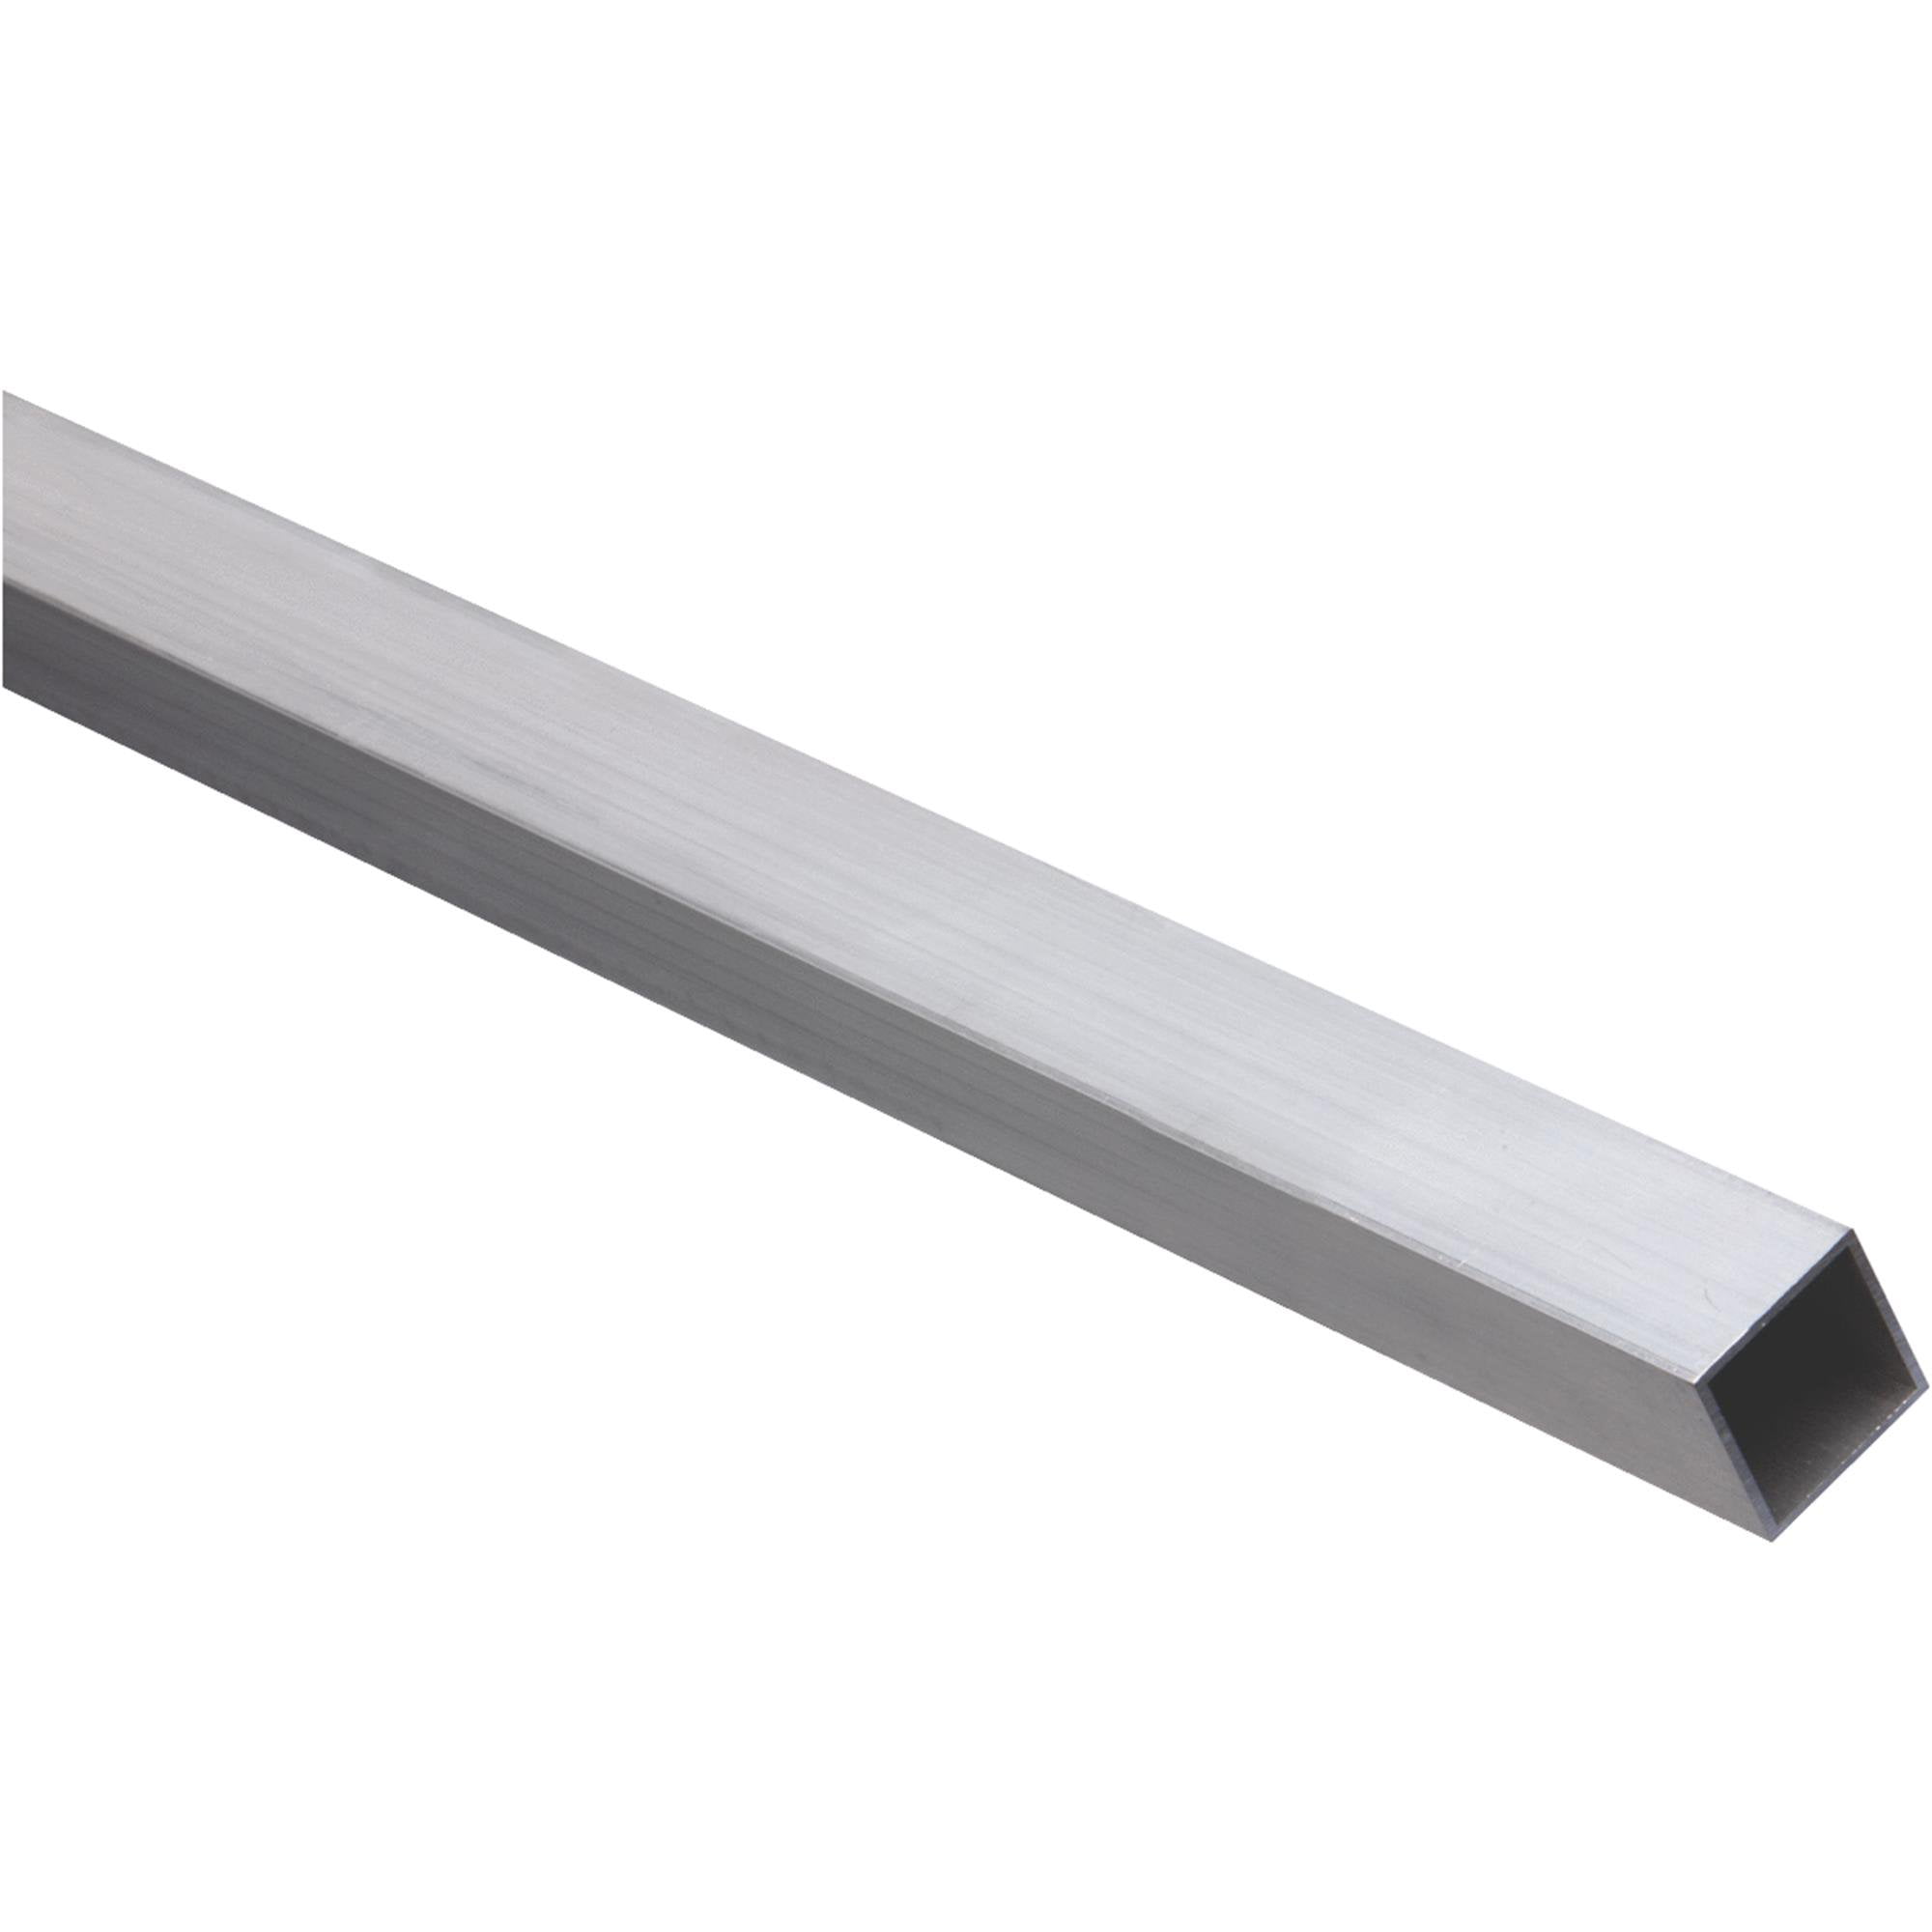 4pcs 10mm*10mm 6063 Aluminum Metal Square Tube 1mm Wall 9.8" Length 